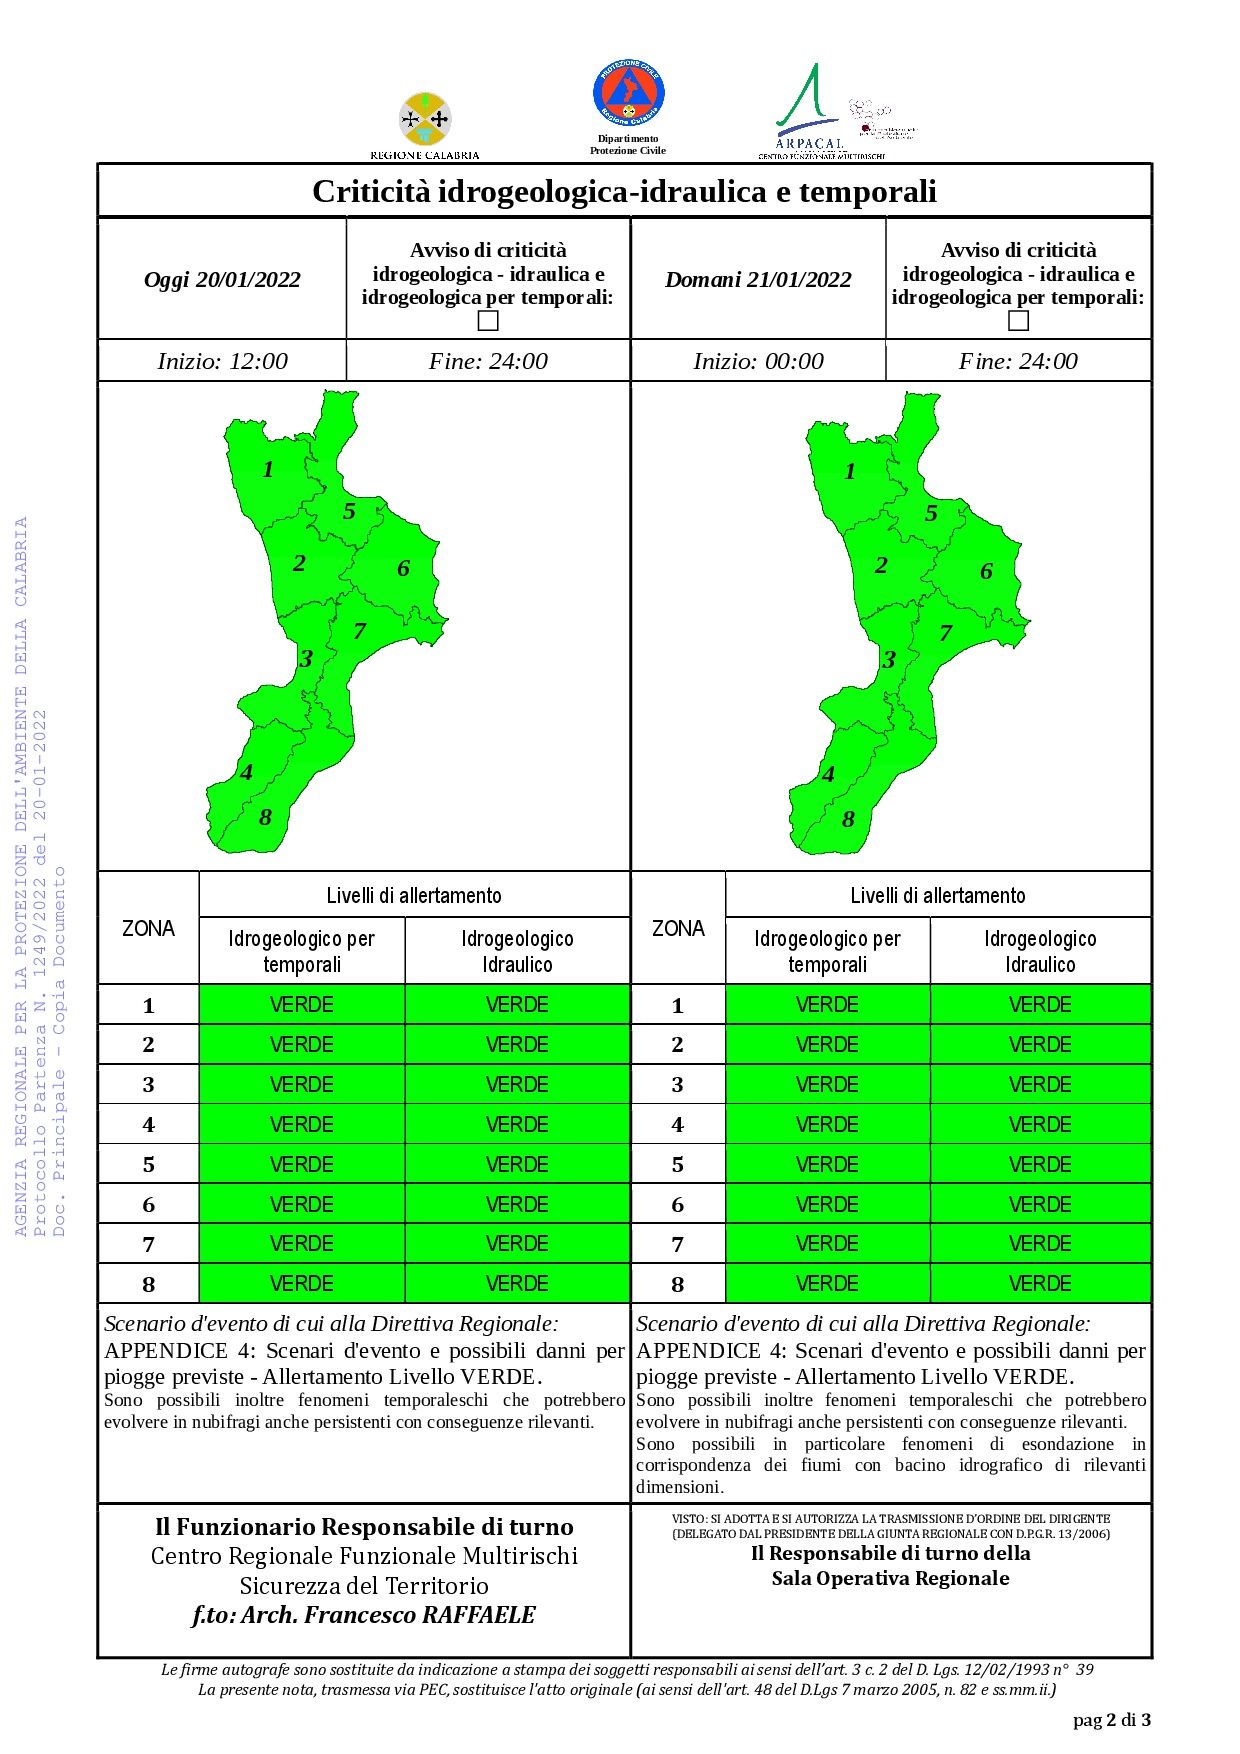 Criticità idrogeologica-idraulica e temporali in Calabria 20-01-2022